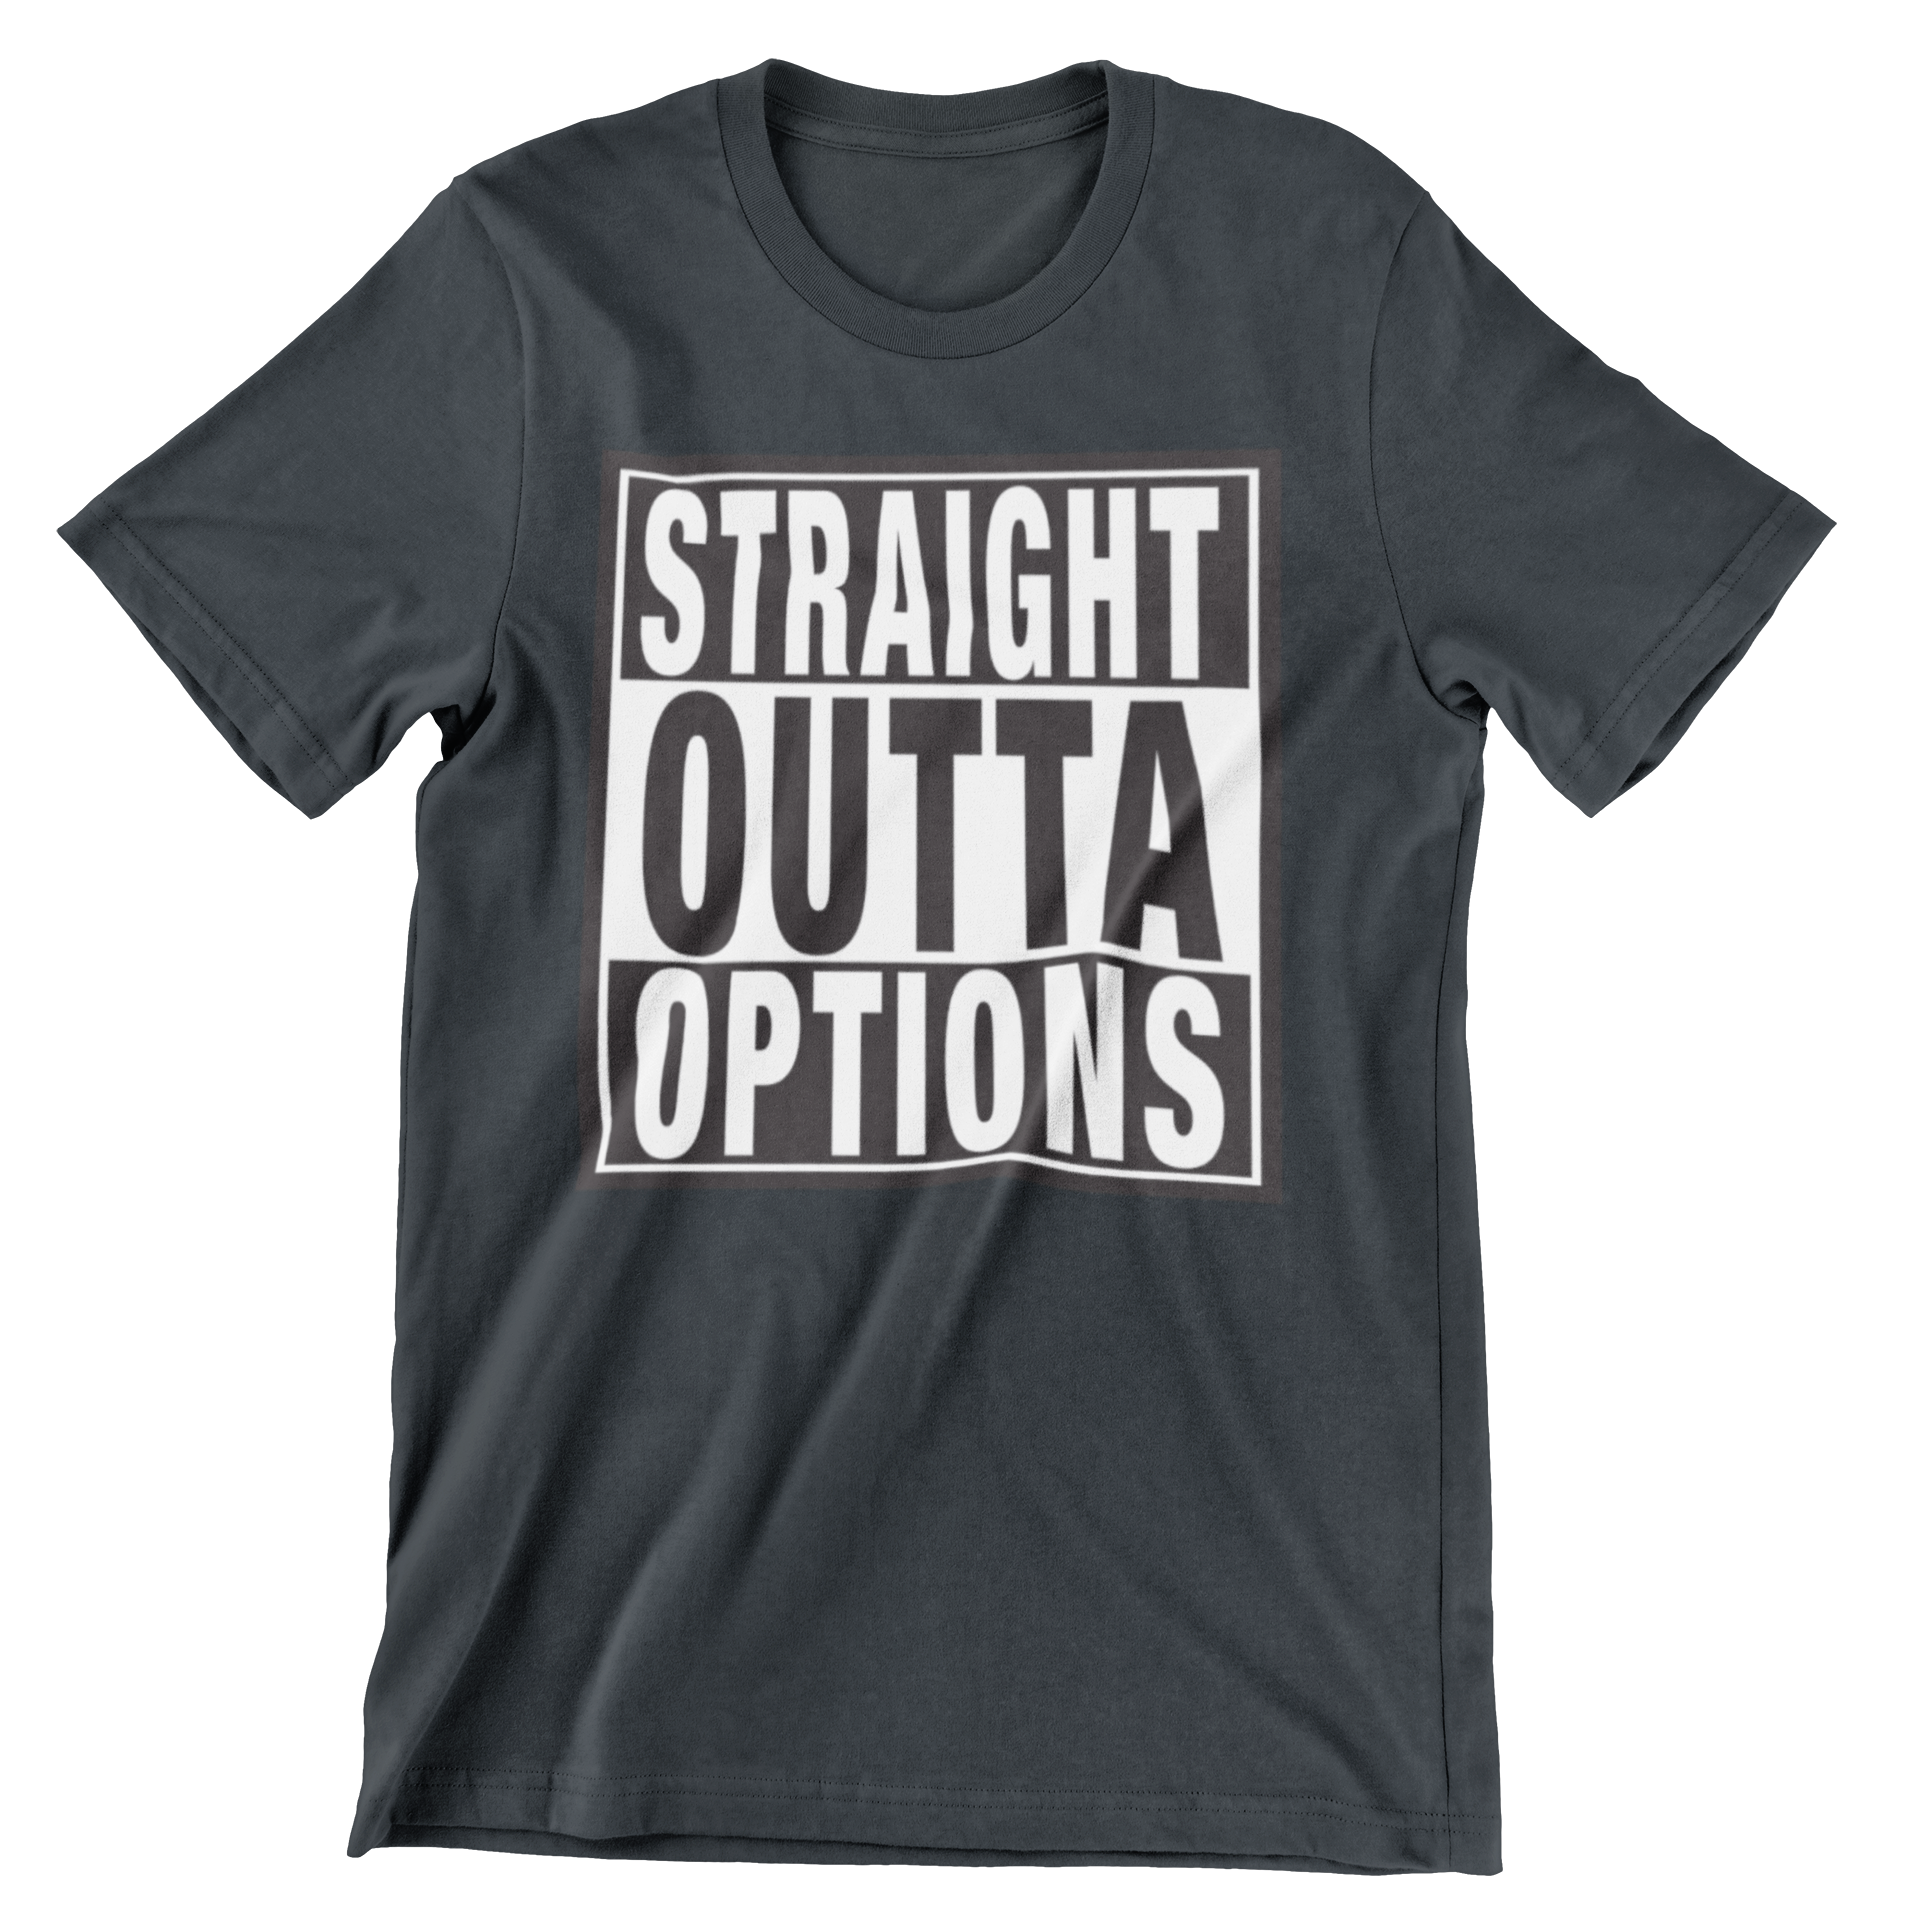 STRAIGHT OUTTA OPTIONS Funny NWA Rap Parody Political Unisex T-Shirt | eBay